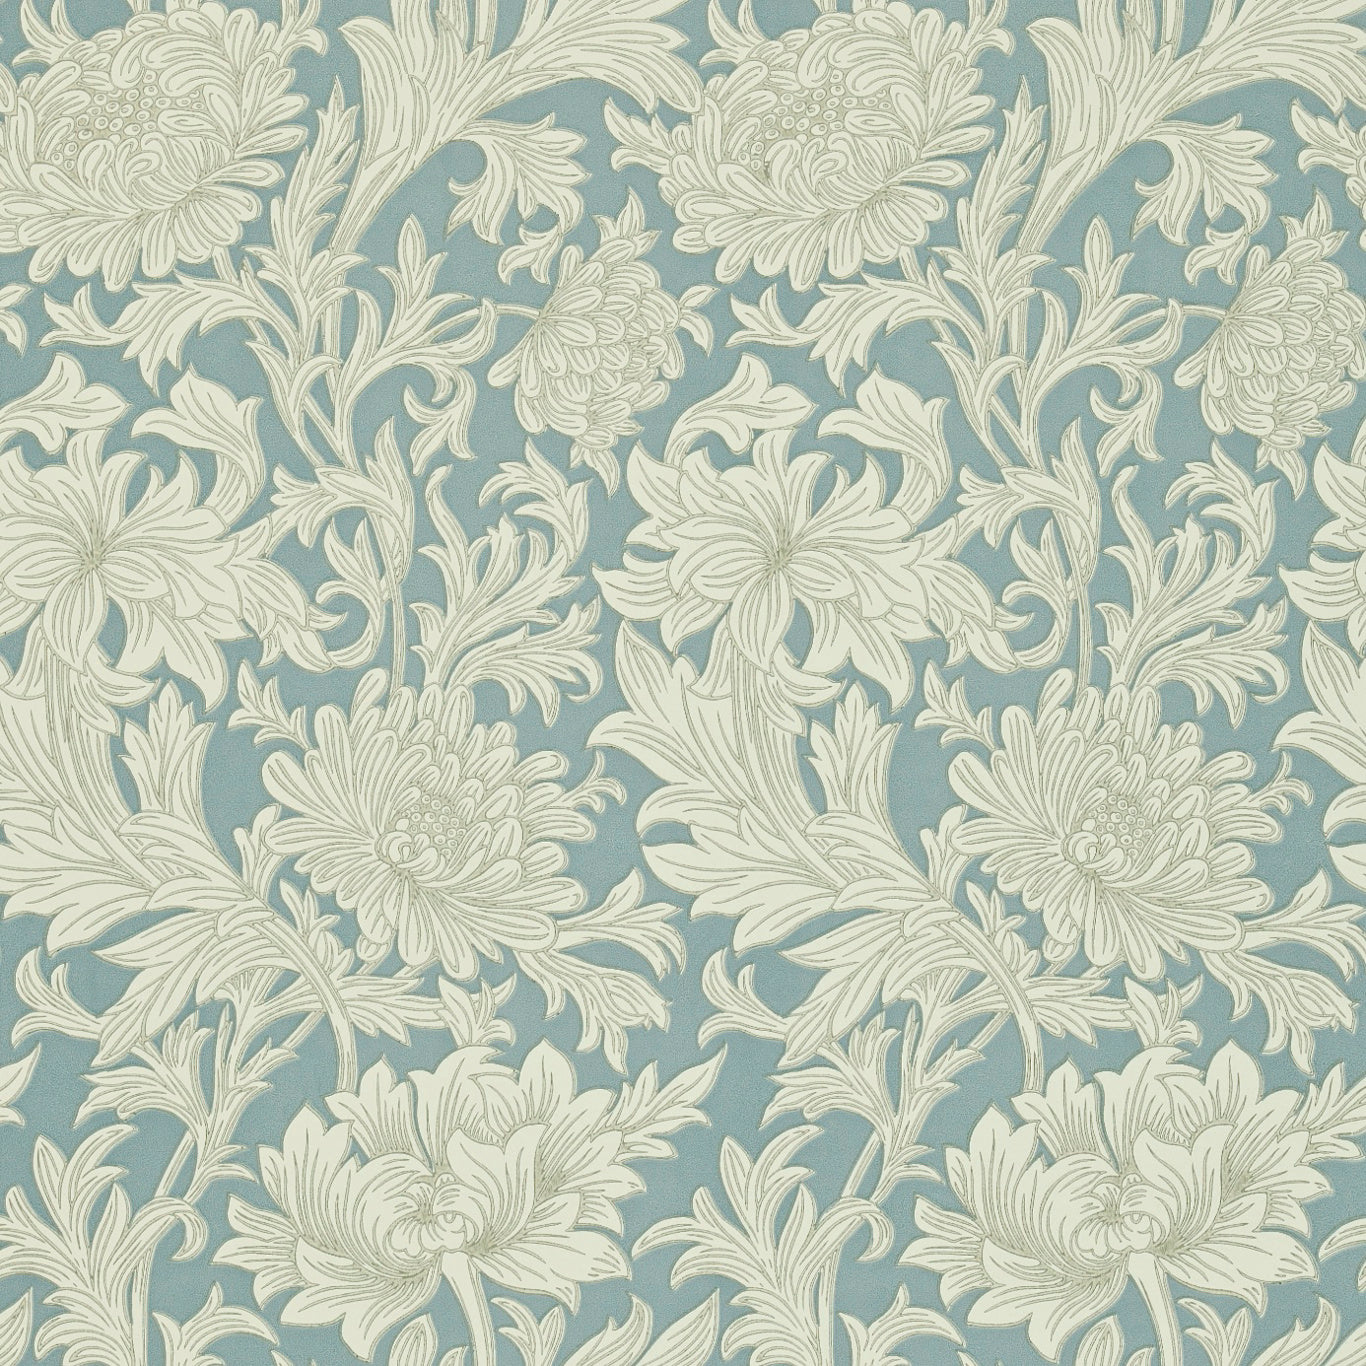 Chrysanthemum Toile China Blue/Cream Wallpaper DMOWCH101 by Morris & Co